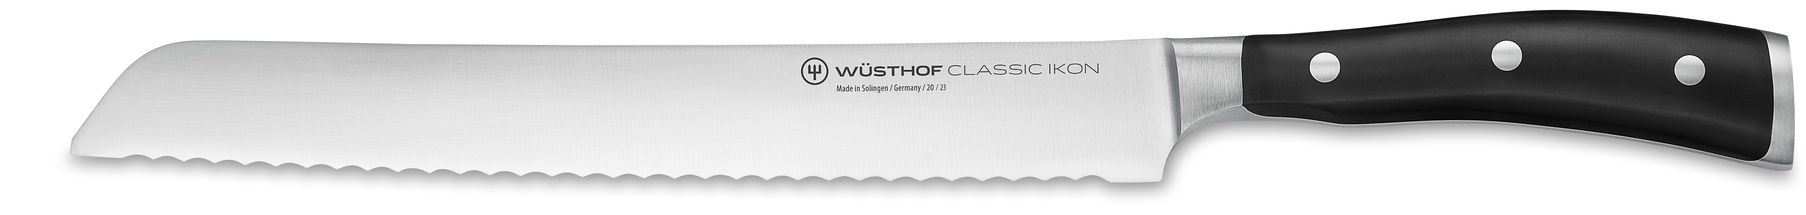 Cuchillo para Pan Wusthof Classic Ikon 23 cm